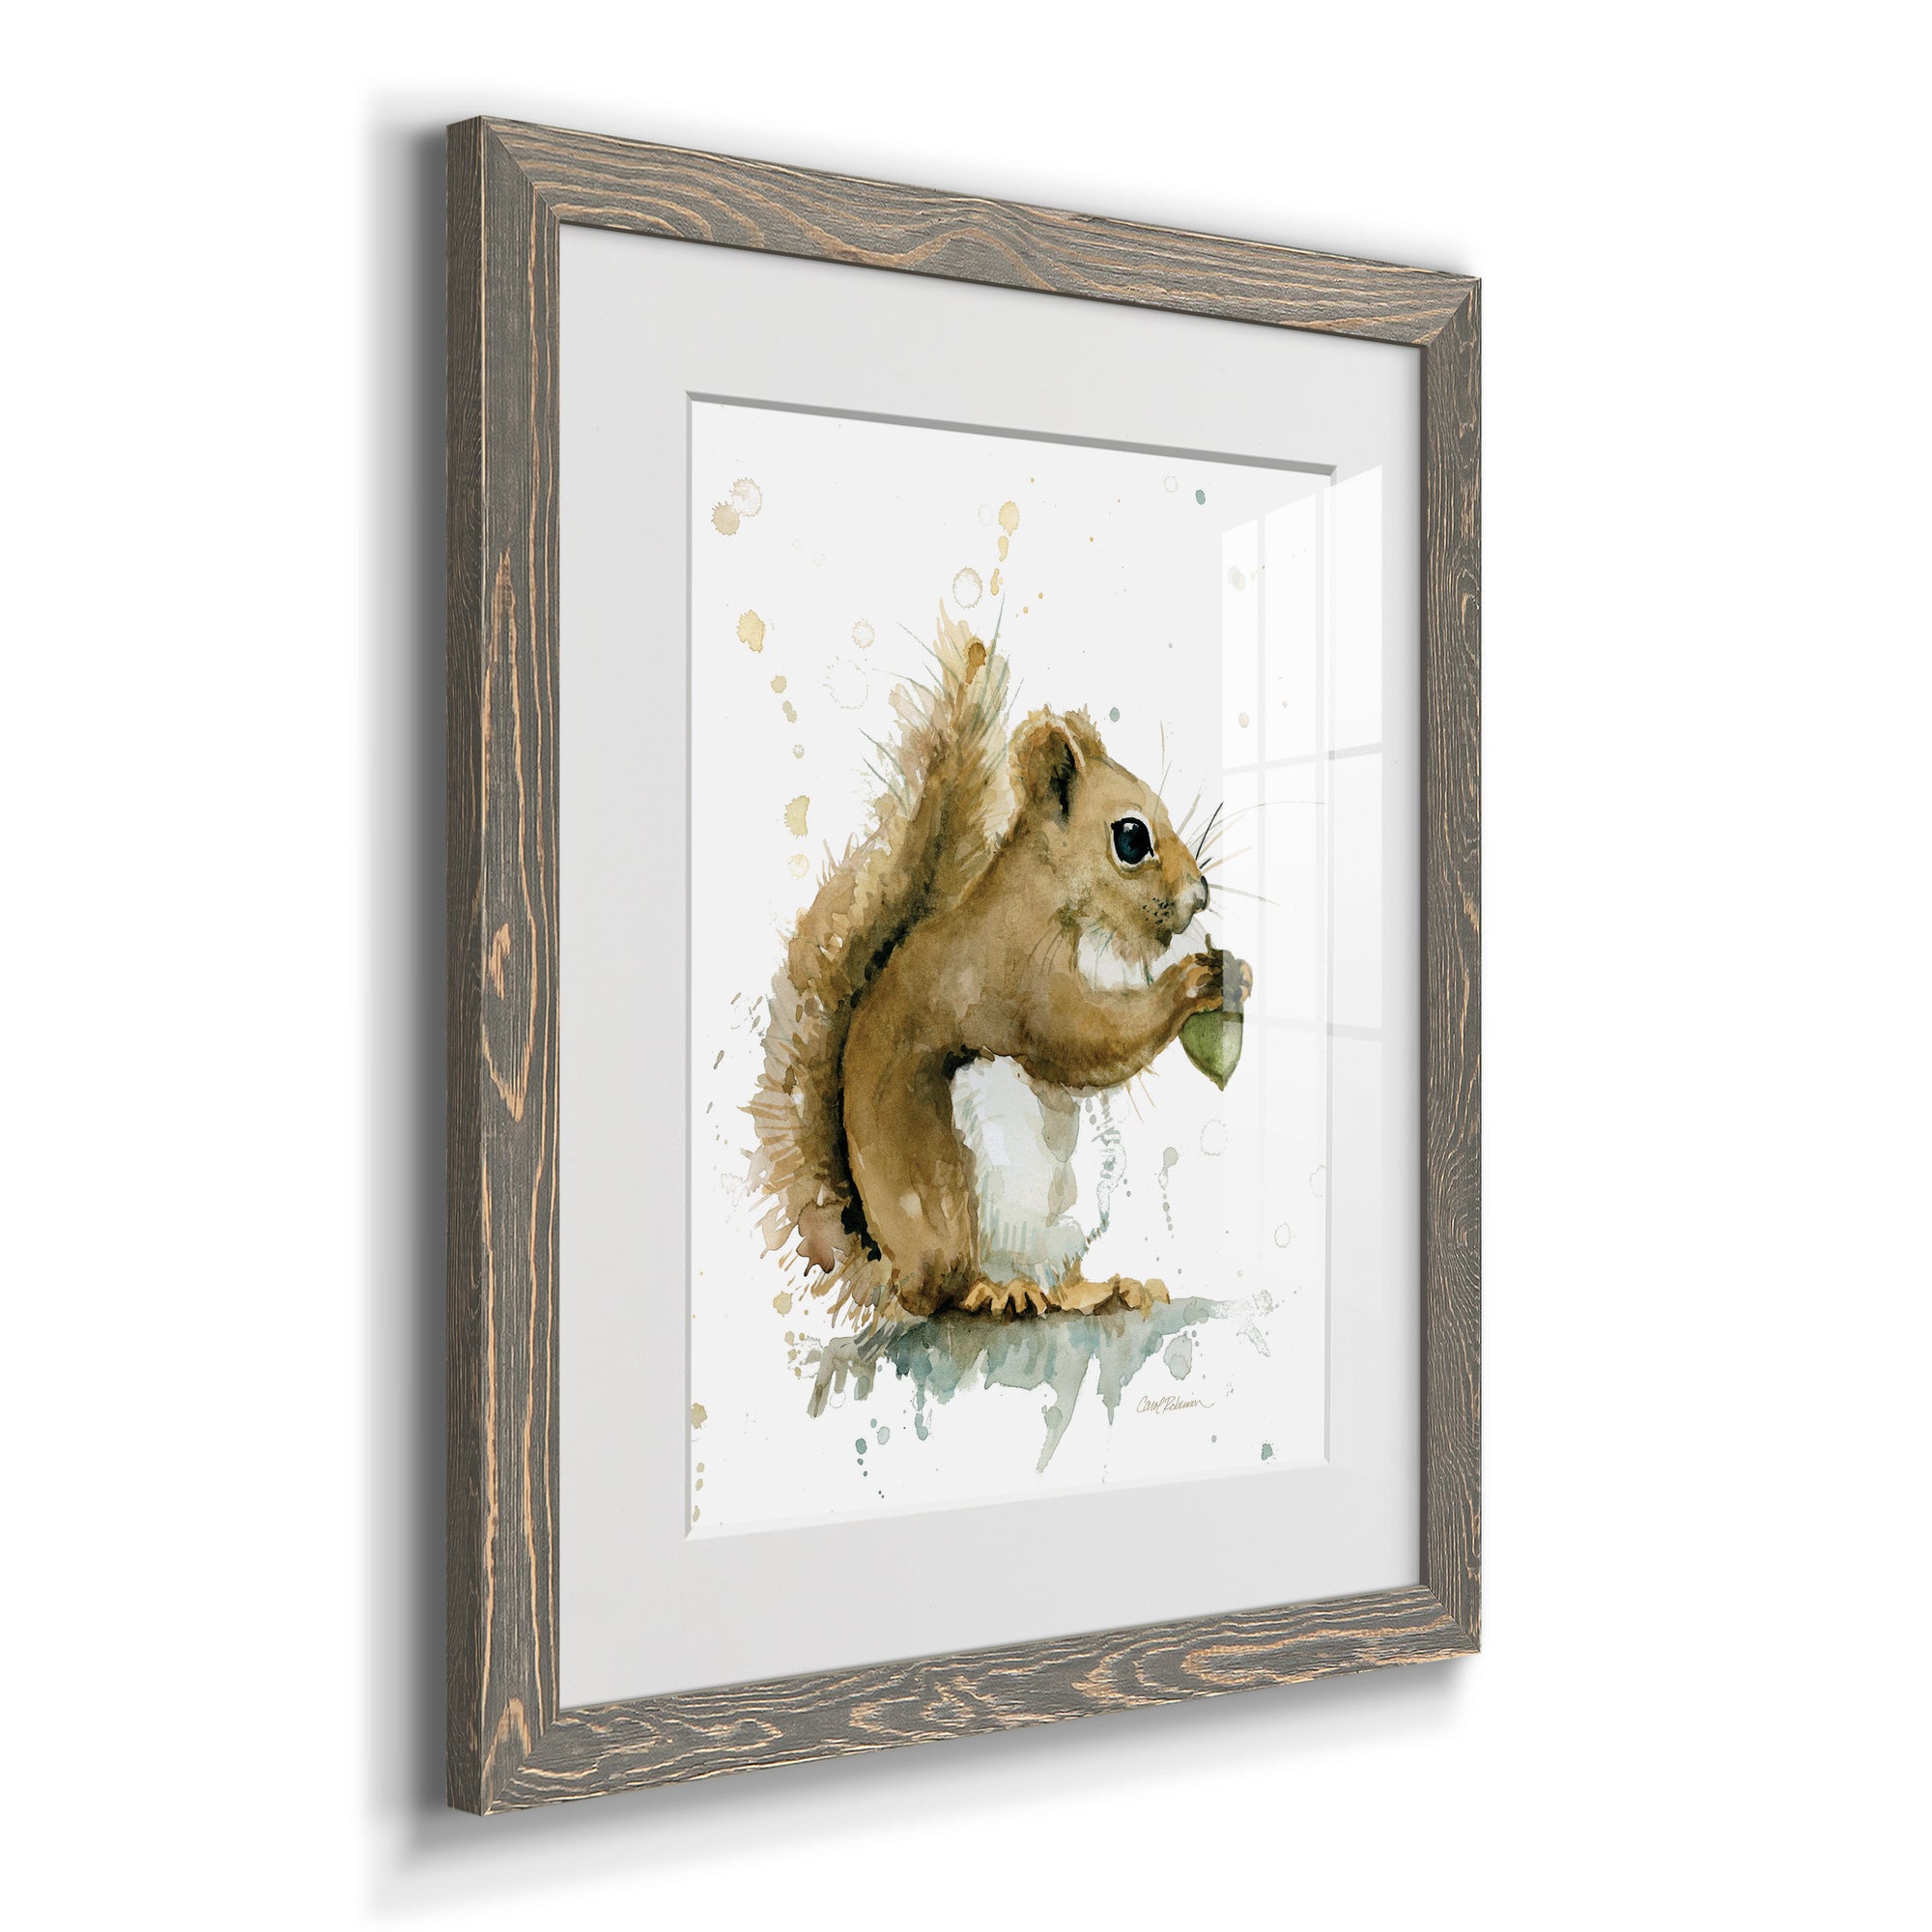 Harvest Squirrel - Premium Framed Print - Distressed Barnwood Frame - Ready to Hang